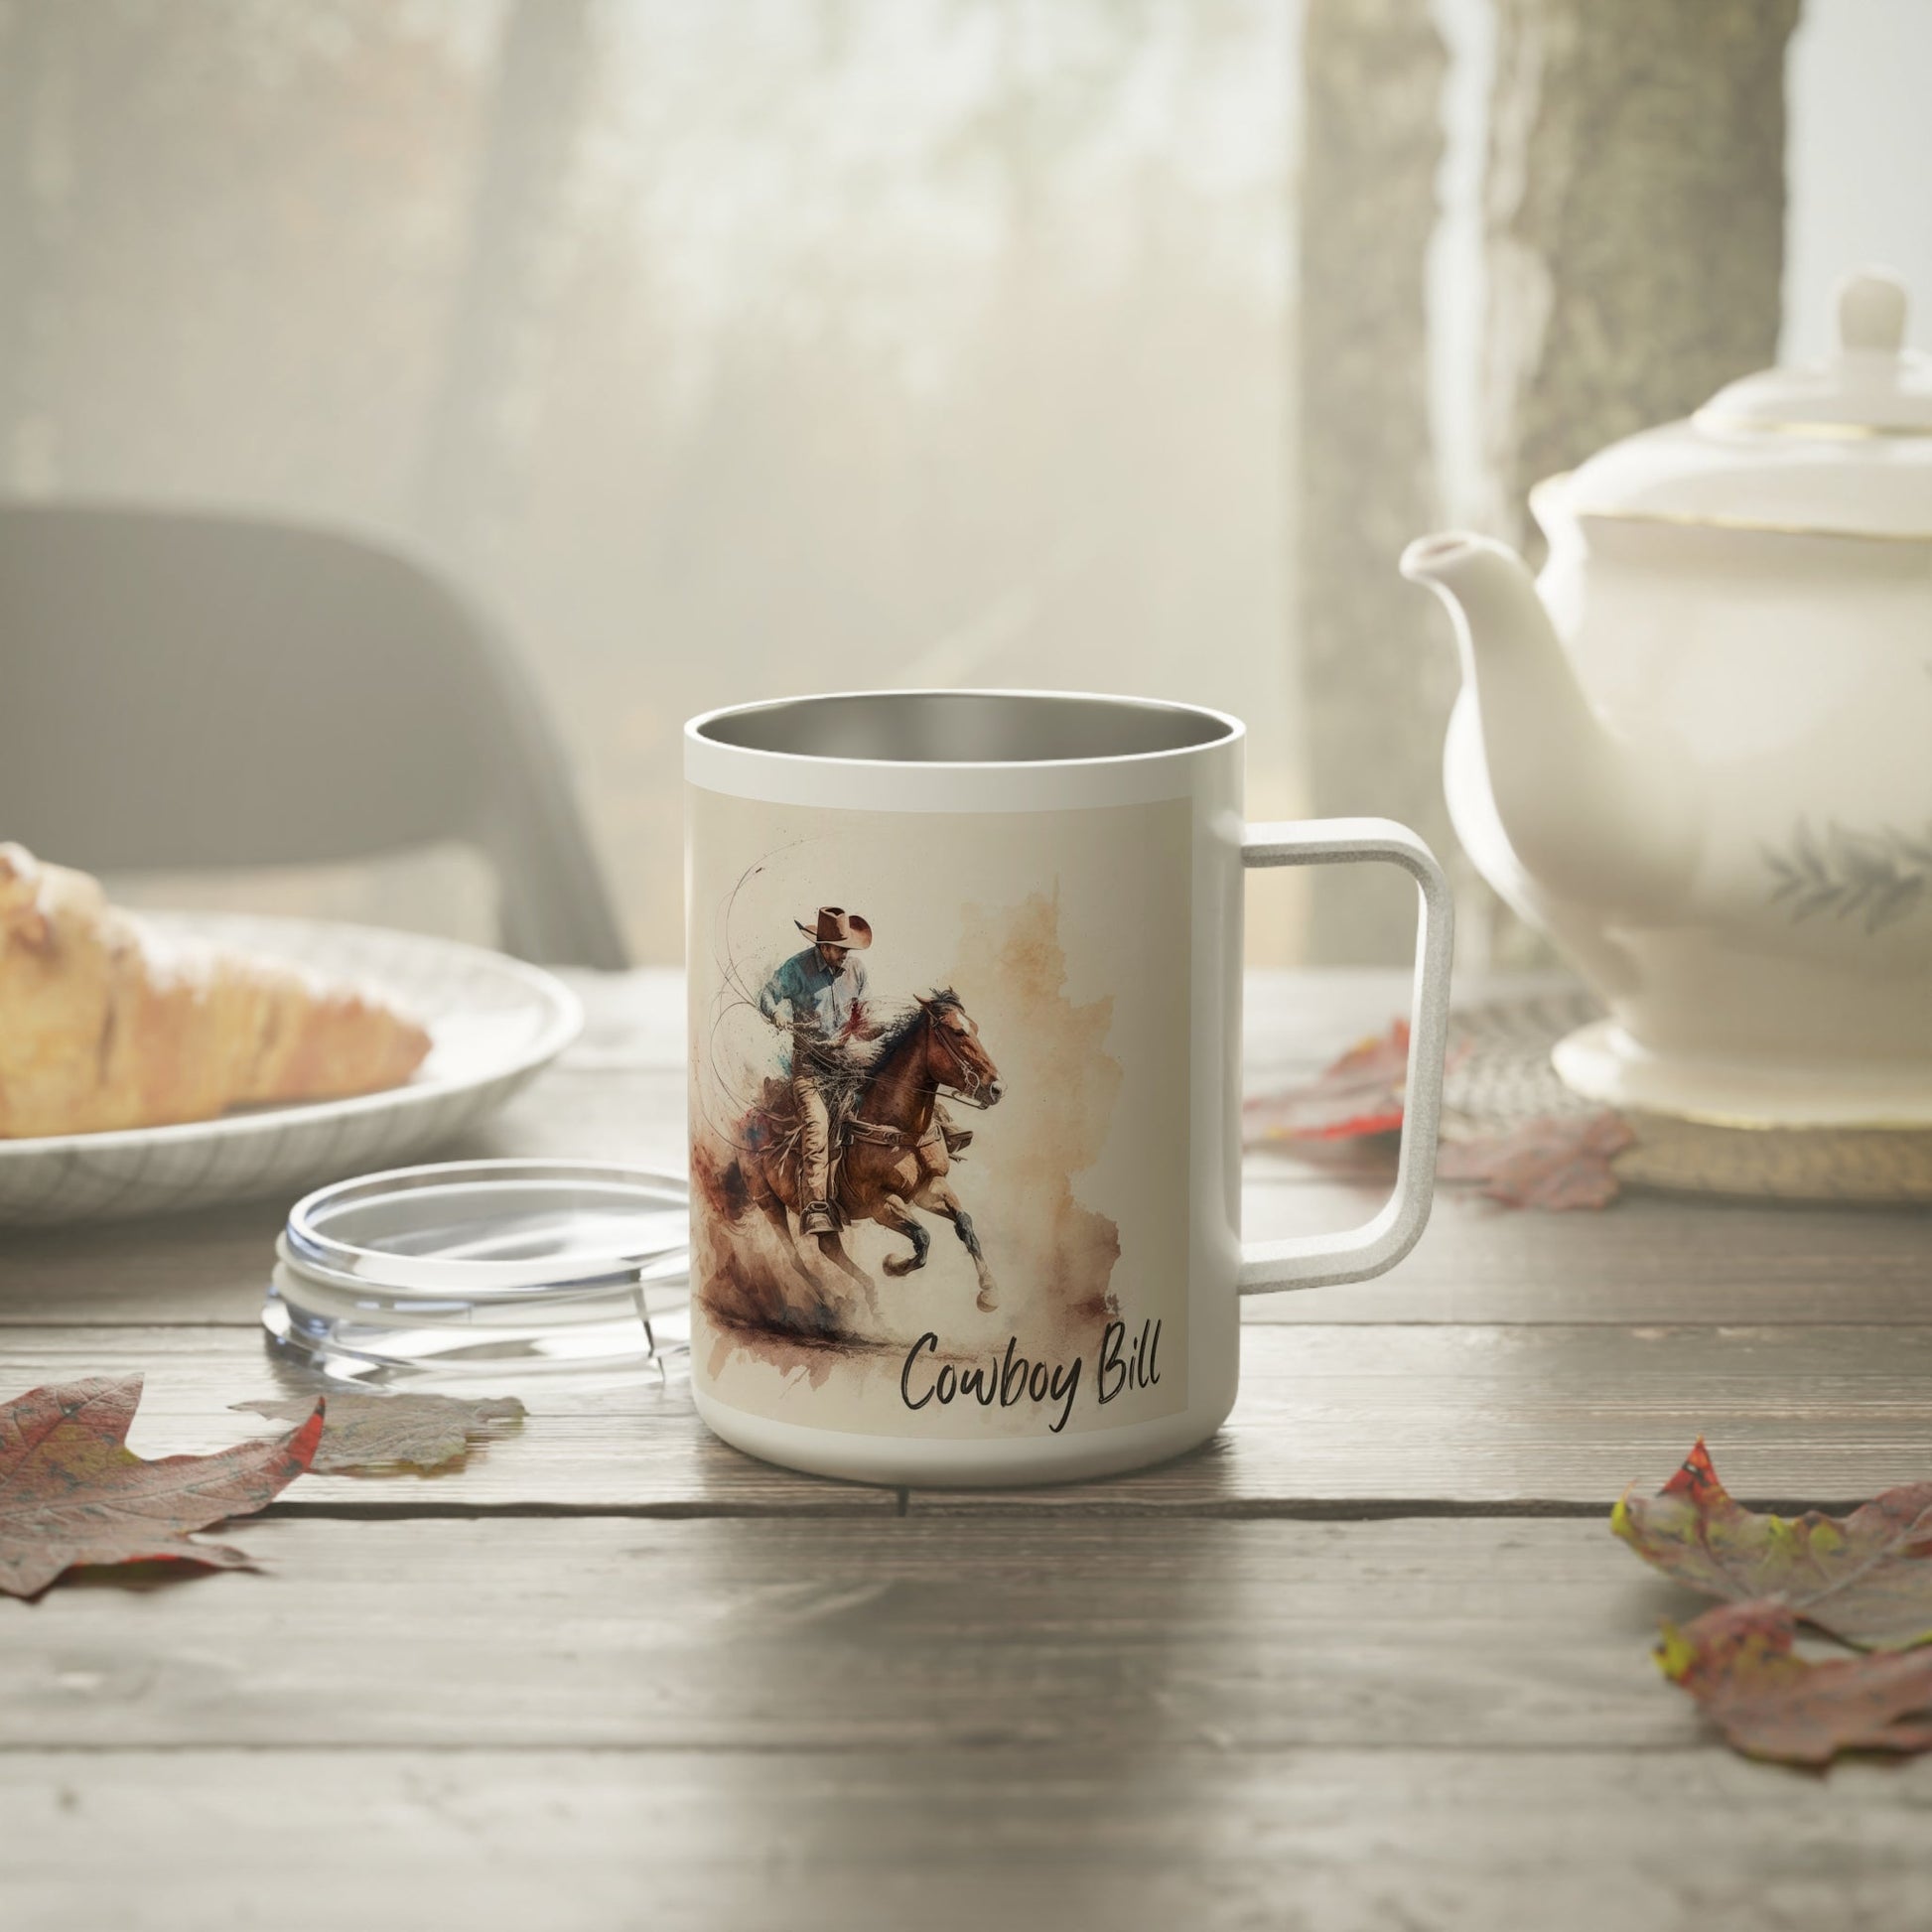 Vintage Hold Your Horses Western Cowboy Front & Back Coffee Mug